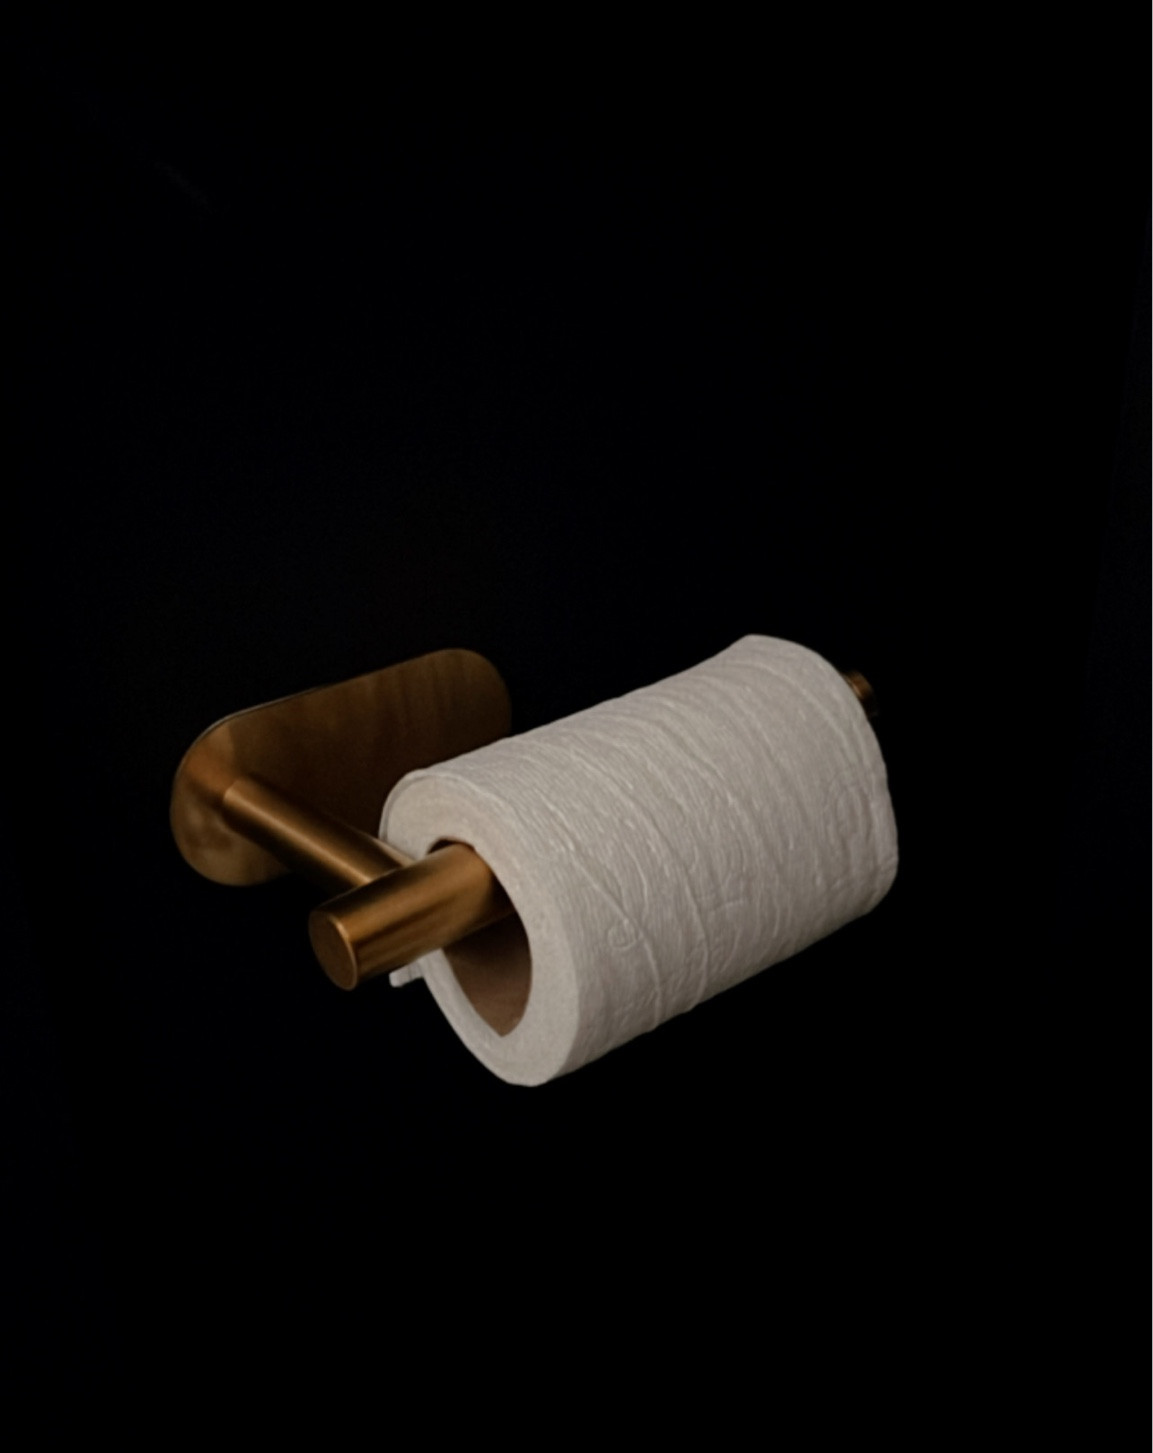 Nearmoon Toilet Paper Holder Self Adhesive, Premium Thicken SUS304  Stainless Ste